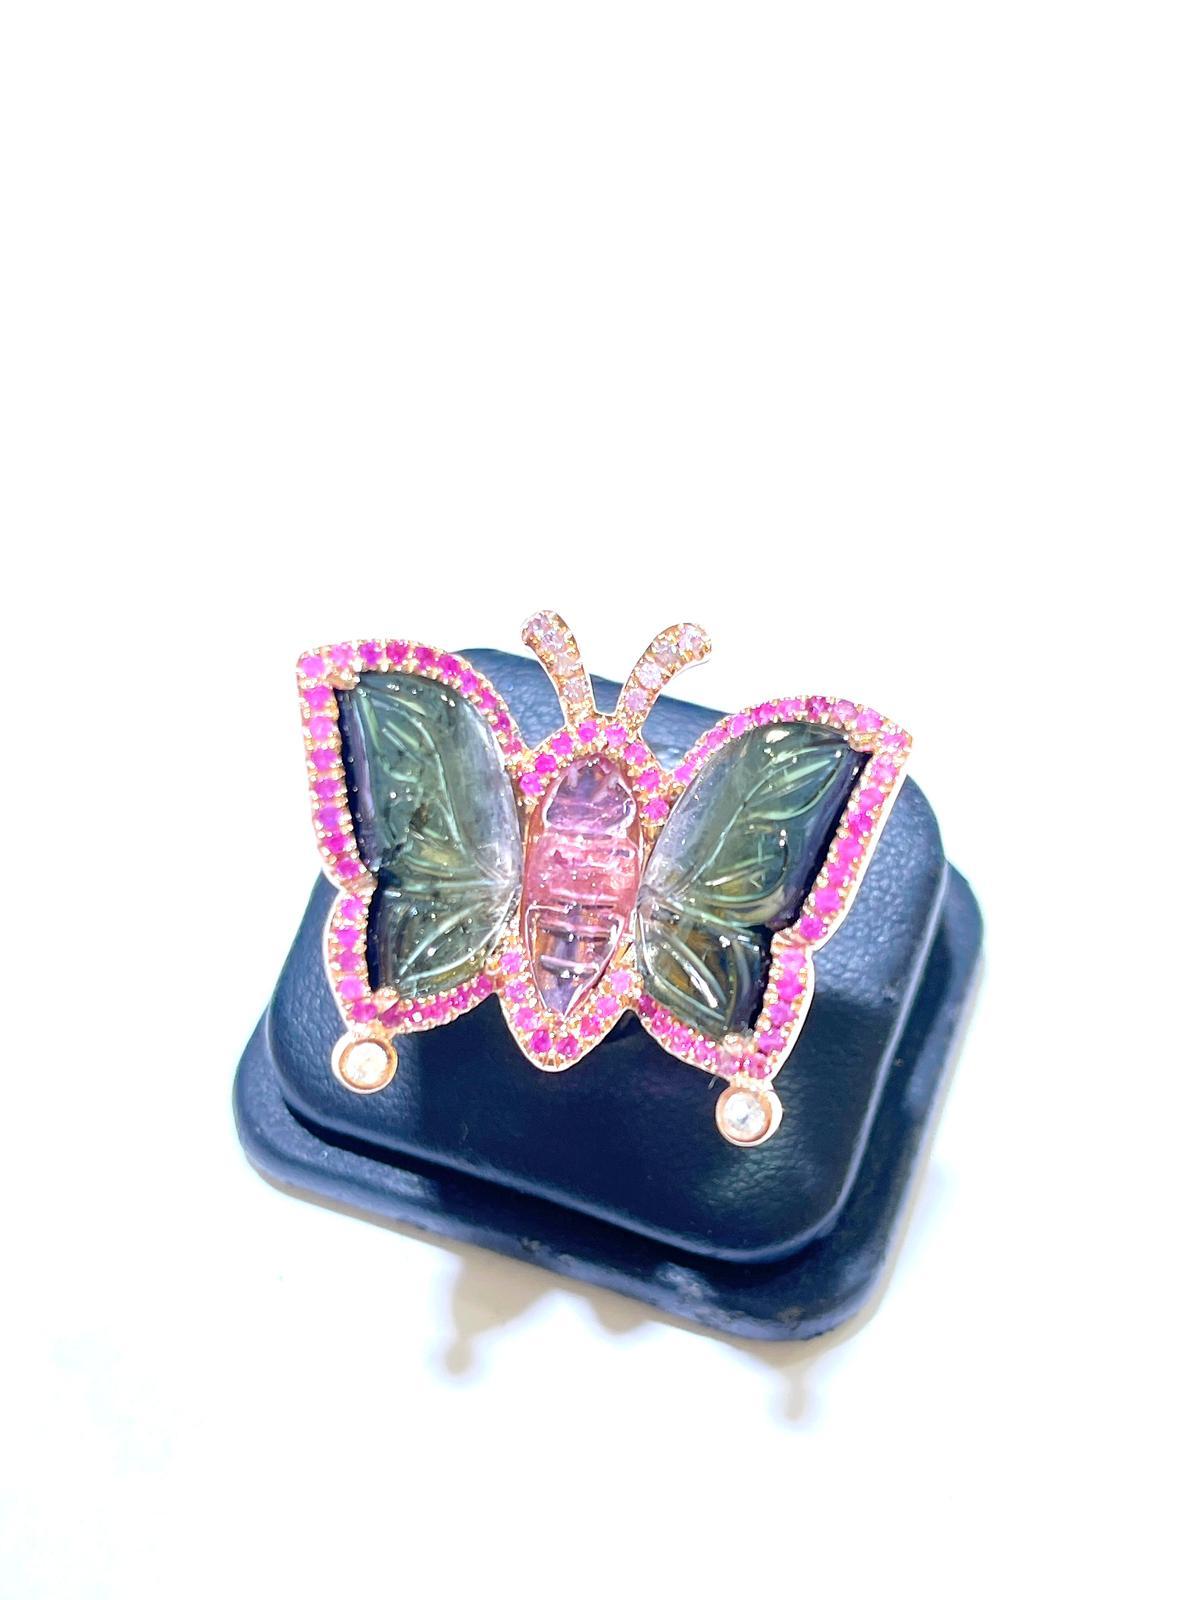 Belle Époque Bochic “Orient” Pink Sapphires & Tourmaline Ring Set In 18K Gold & Silver  For Sale